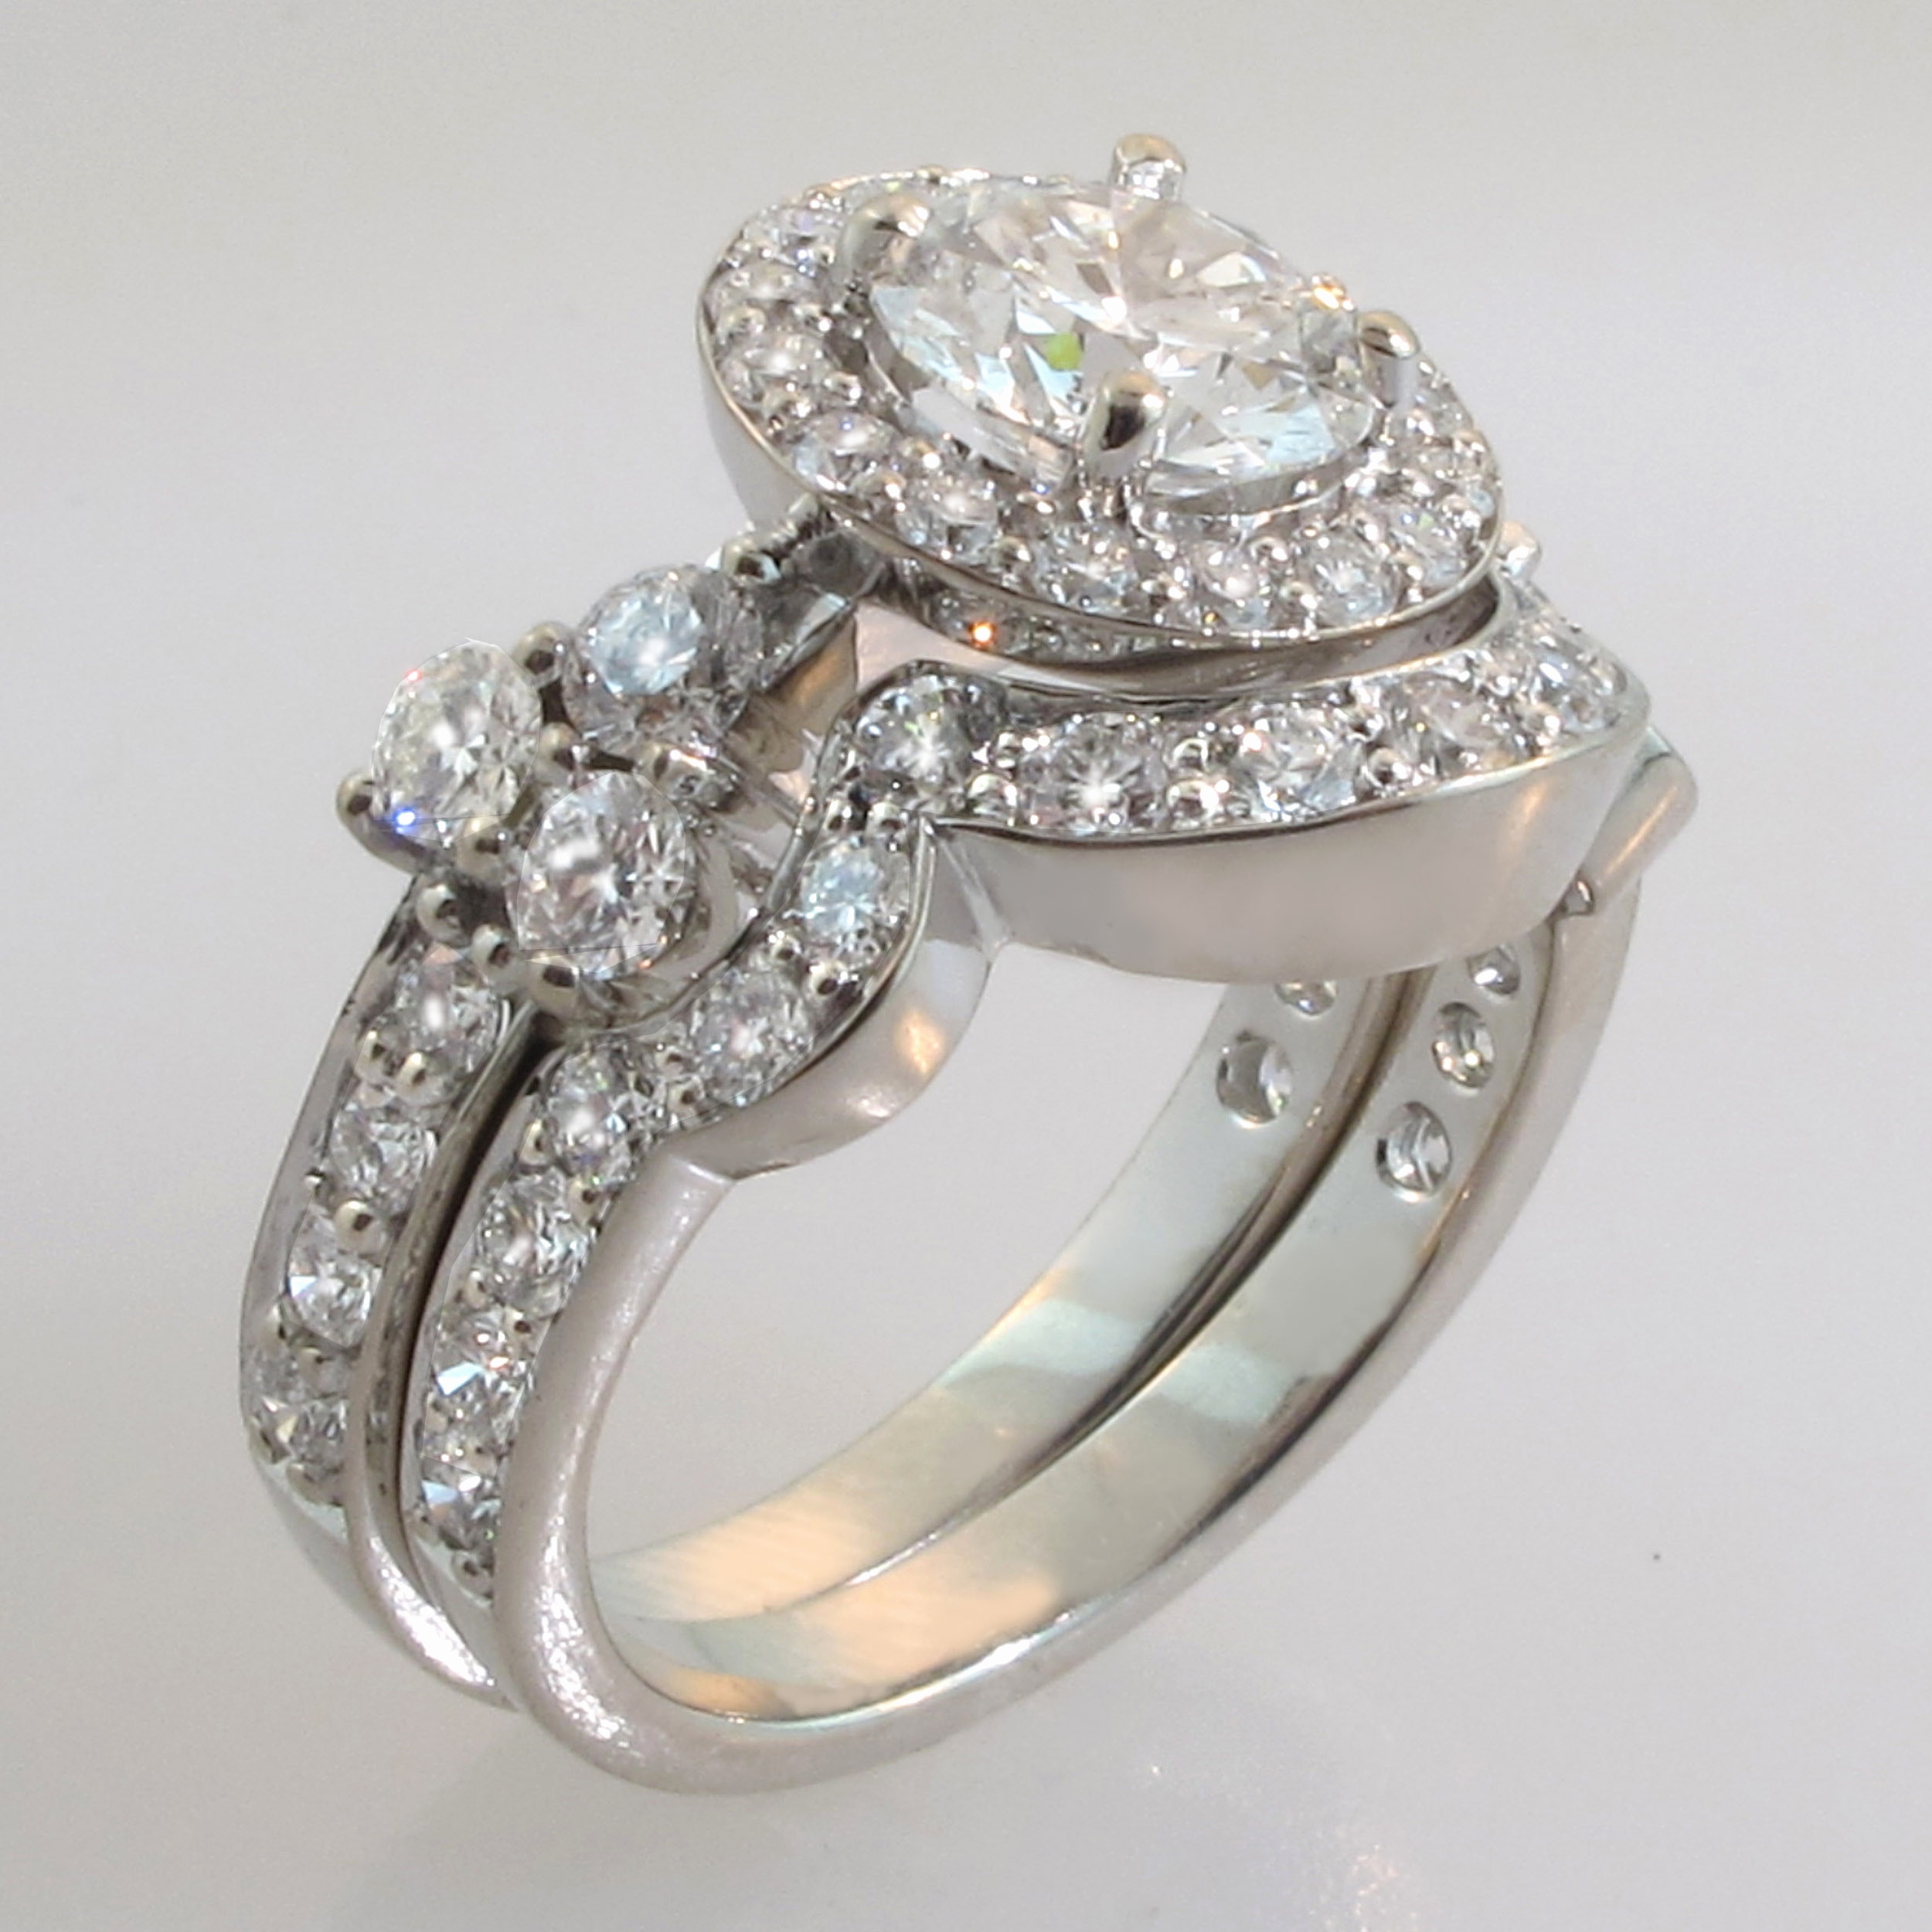 Kmart Jewelry Bracelets
 Kmart Wedding Ring Sets New Kmart Jewelry Wedding Bands